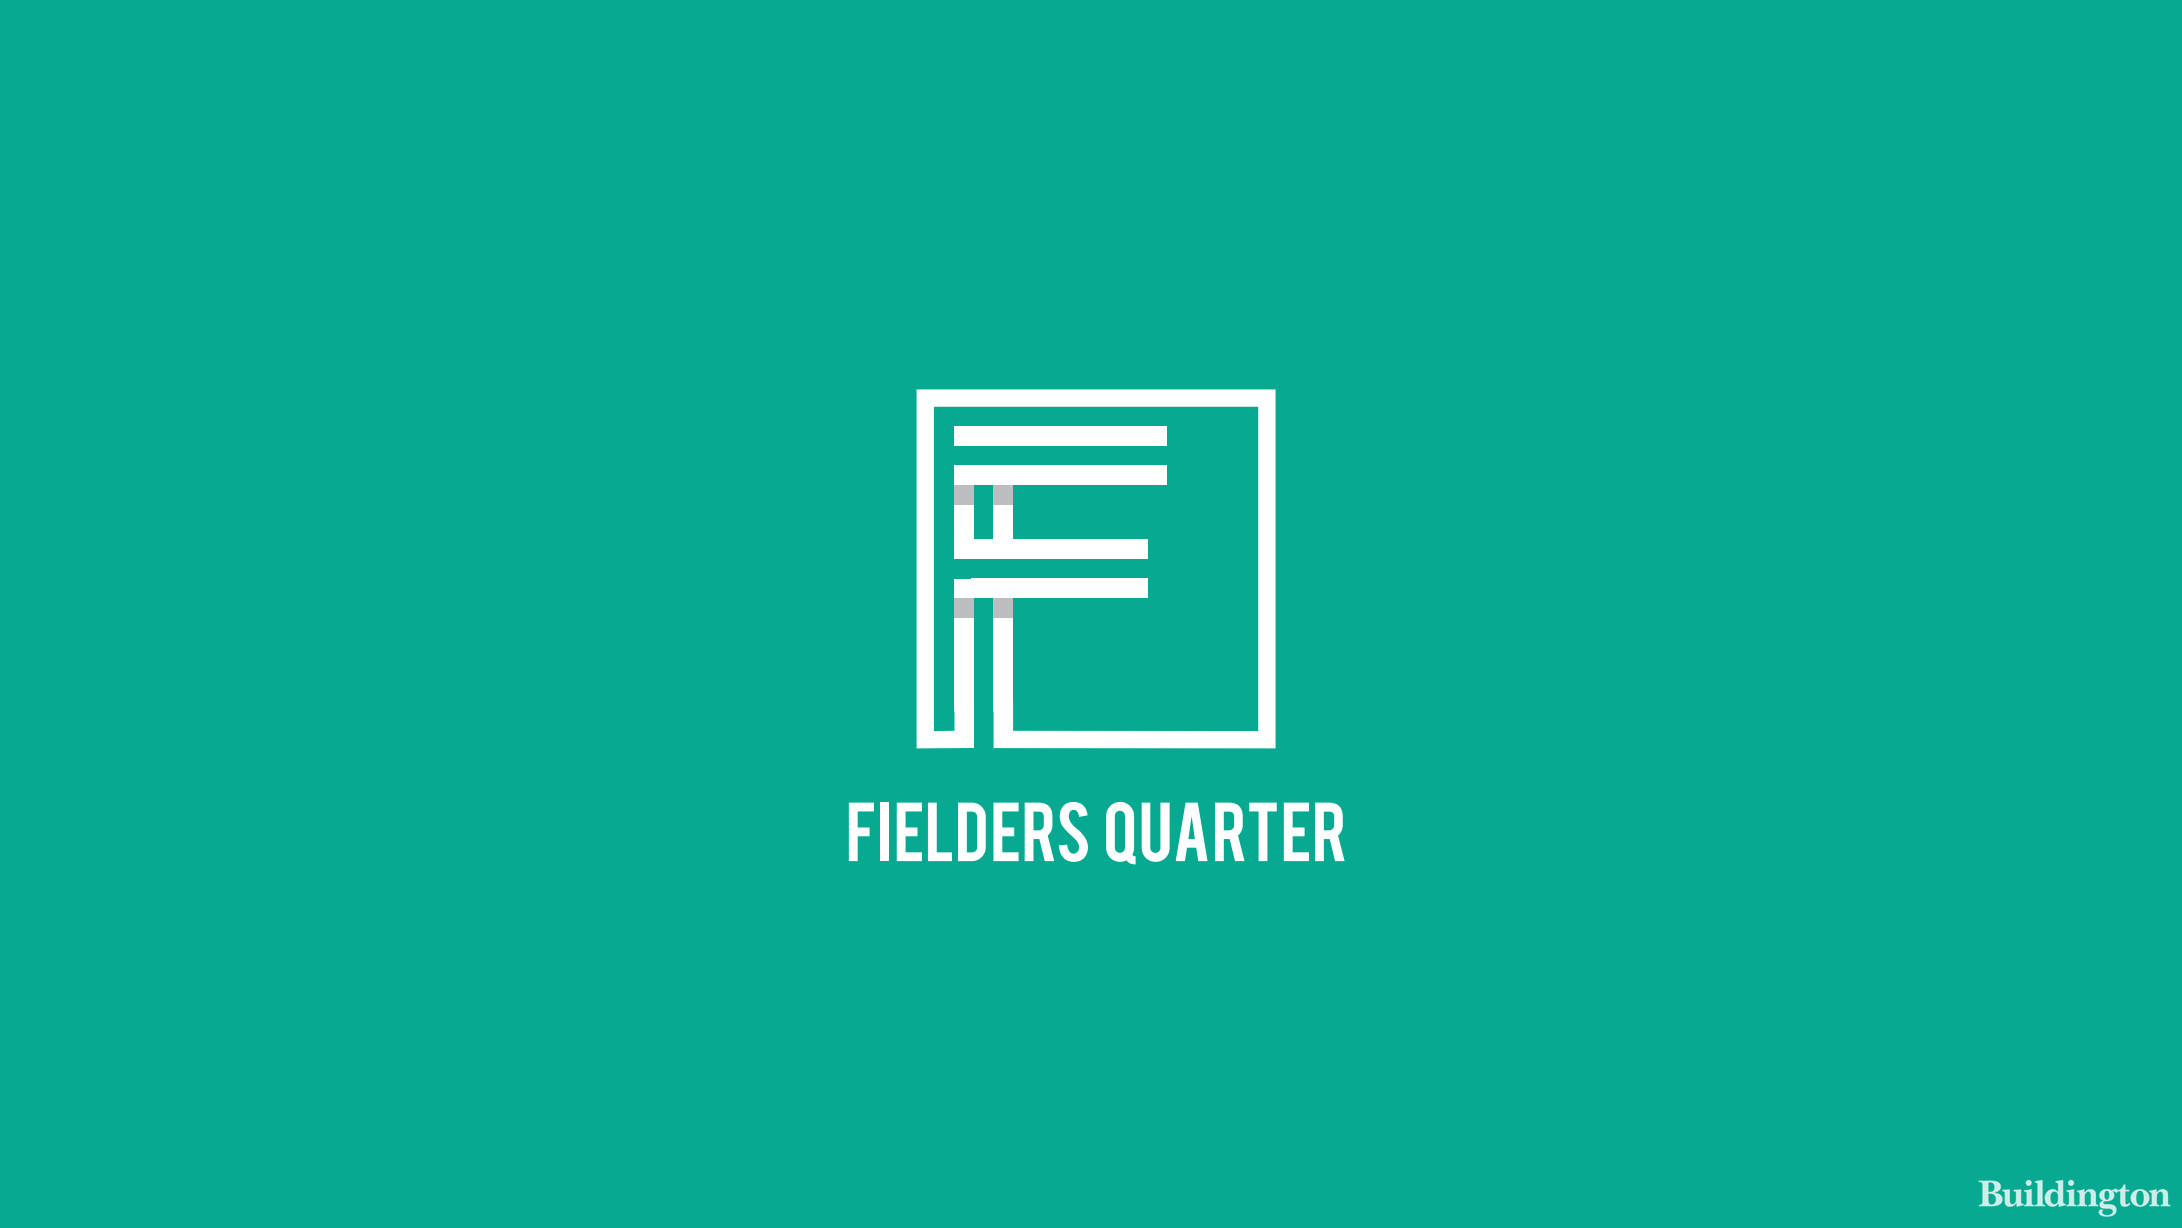 Fielders Quarter development cover image logo.